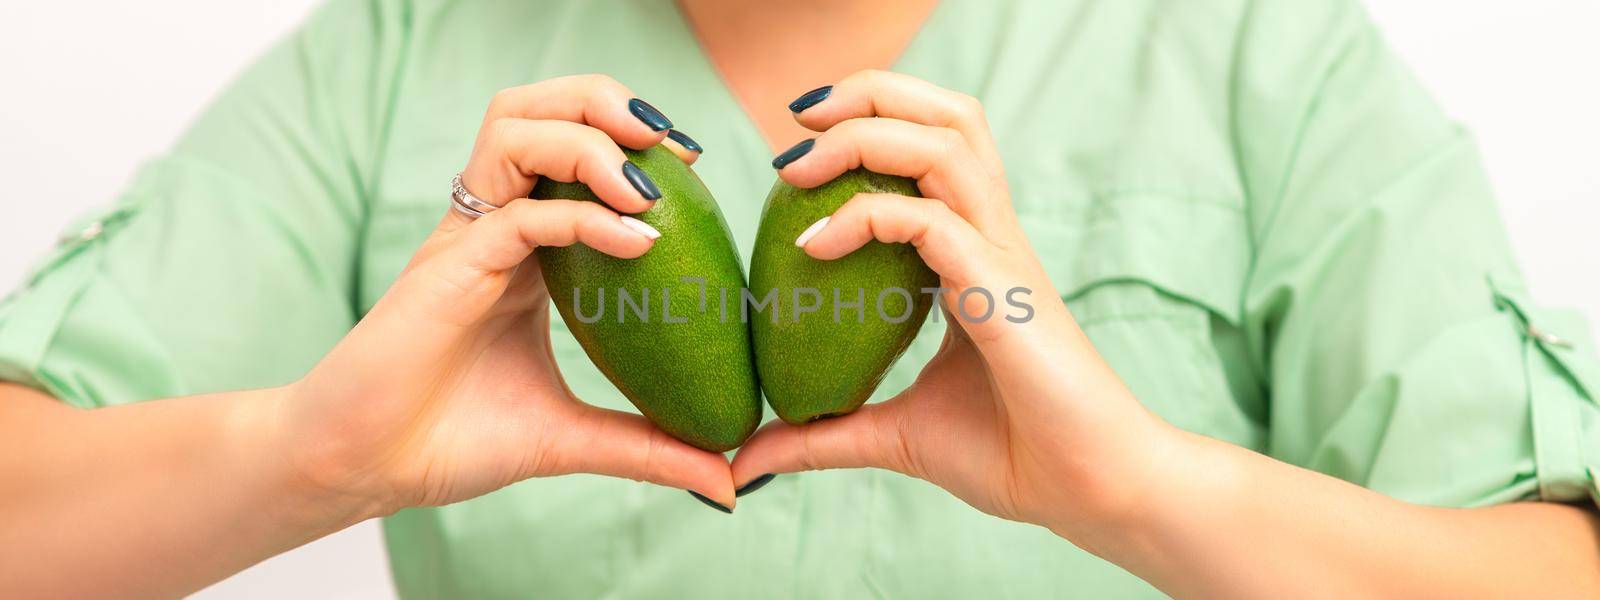 Female nutritionist doctor holding organic avocado fruit. Healthy lifestyle concept. by okskukuruza